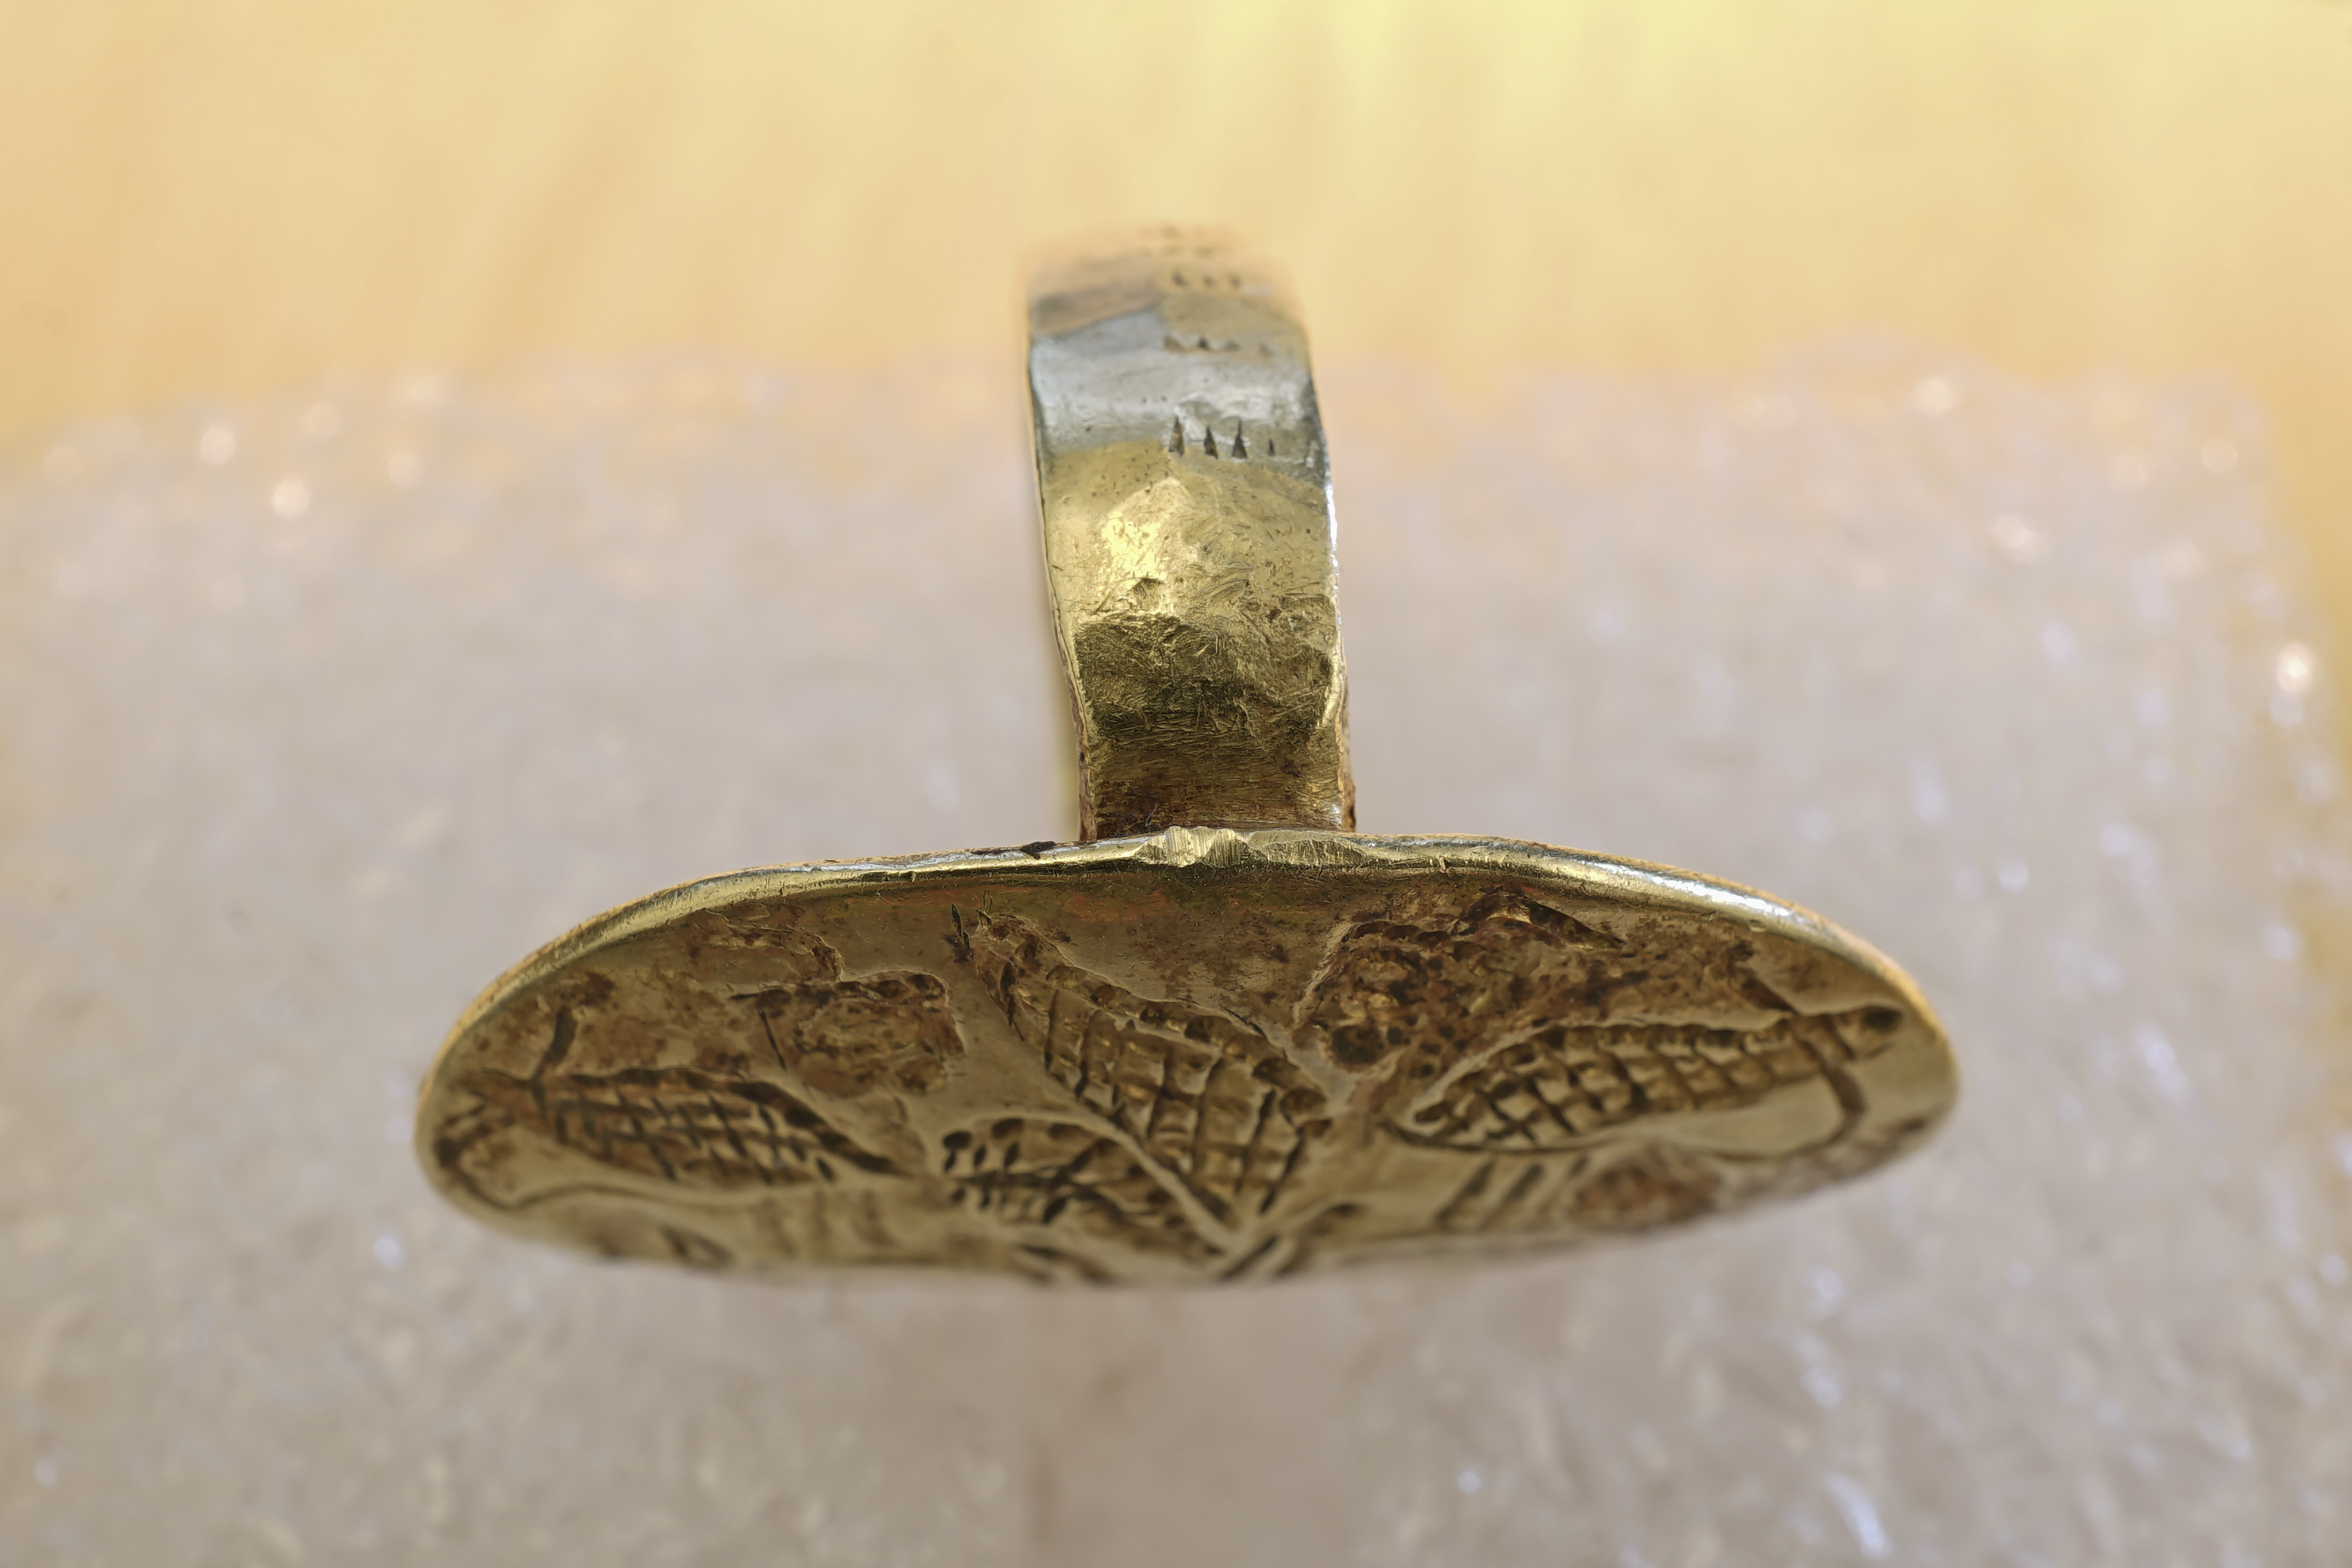 The gold Mycenaean-era ring